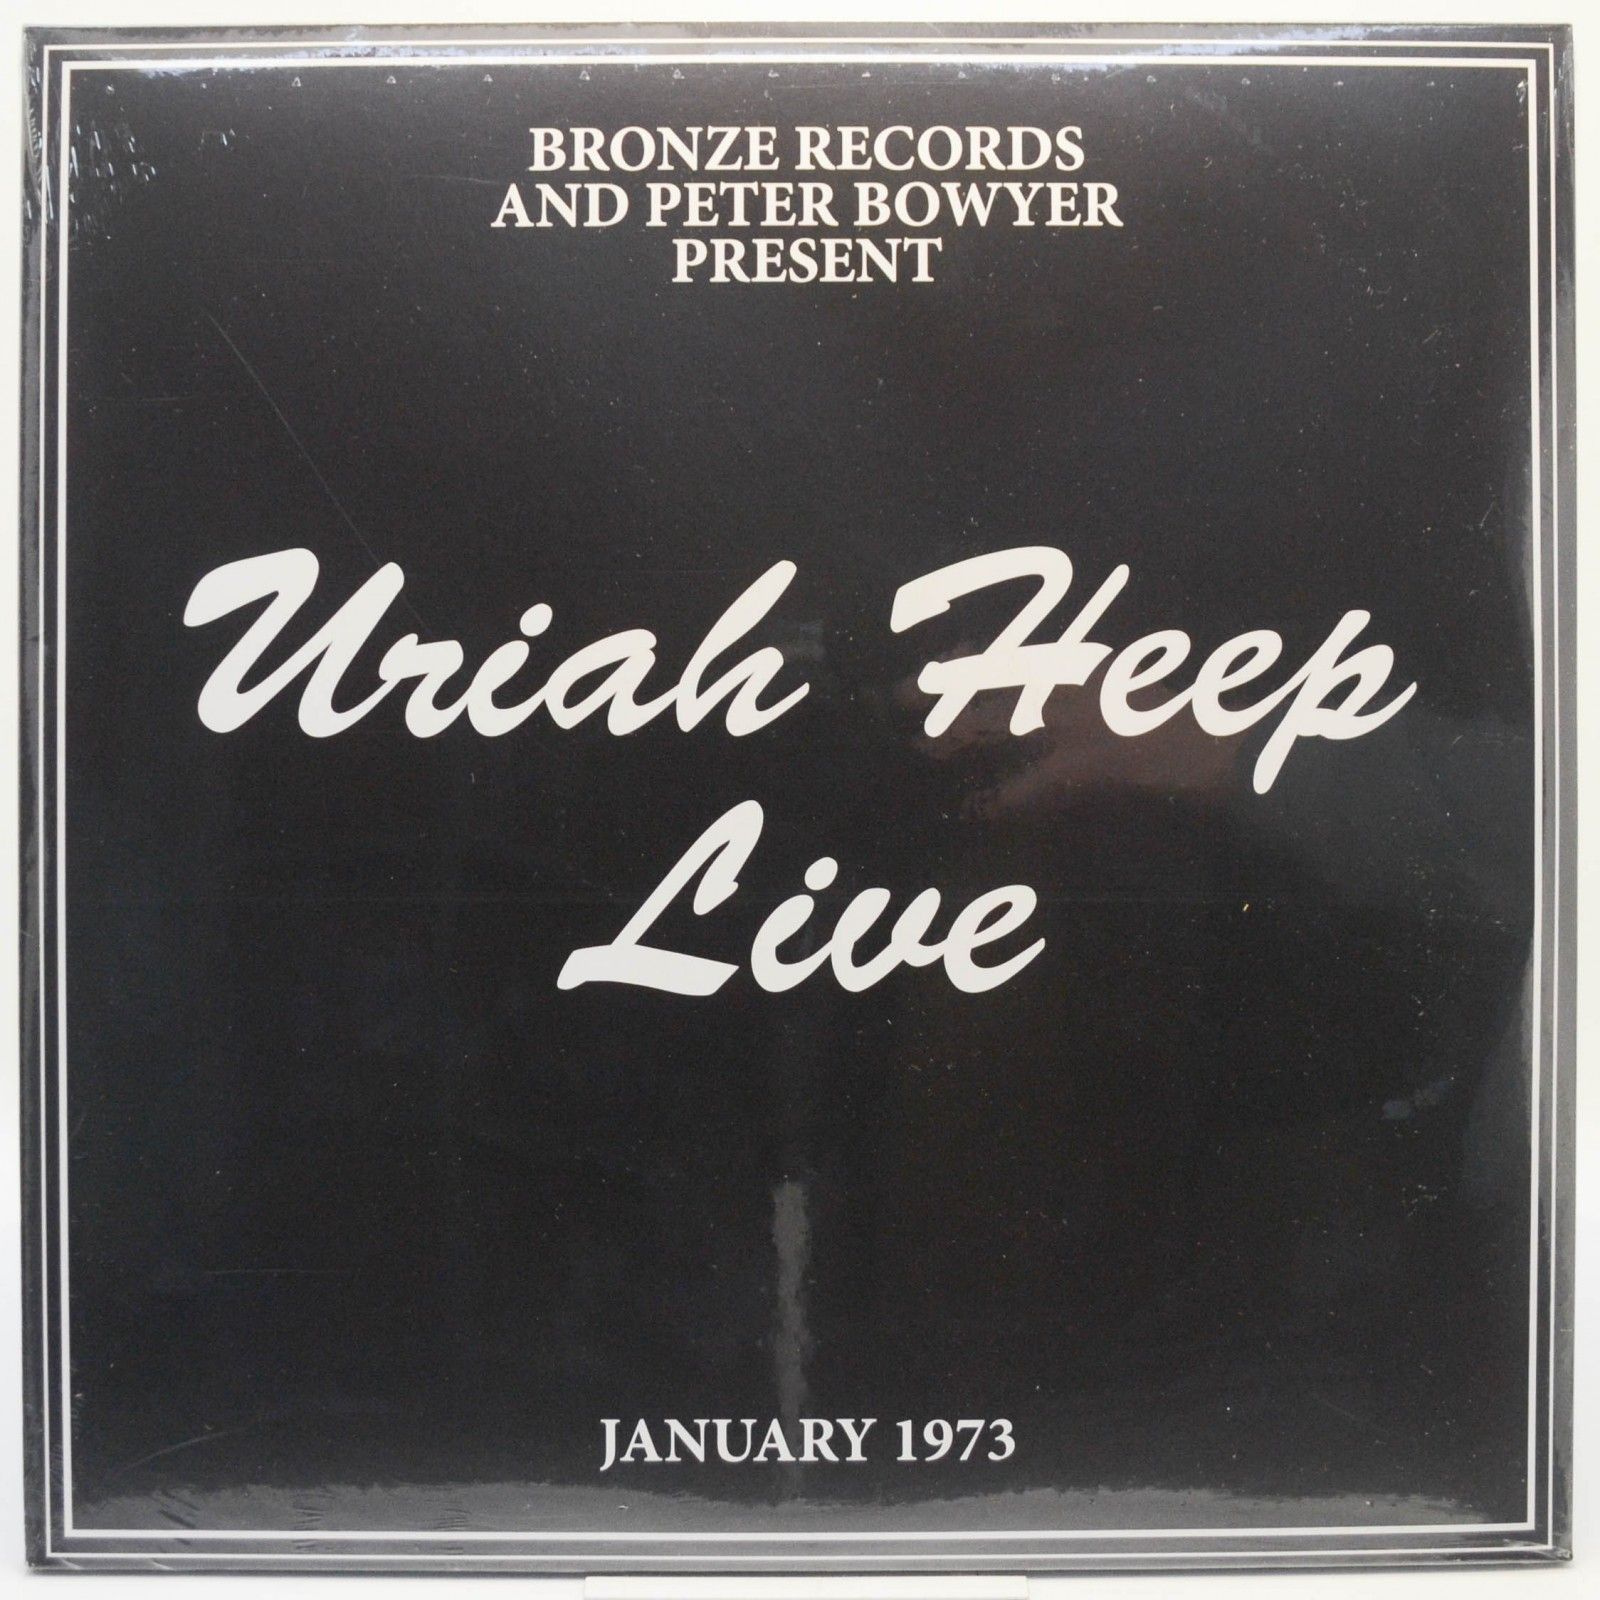 Uriah Heep — Uriah Heep Live (2LP), 1973